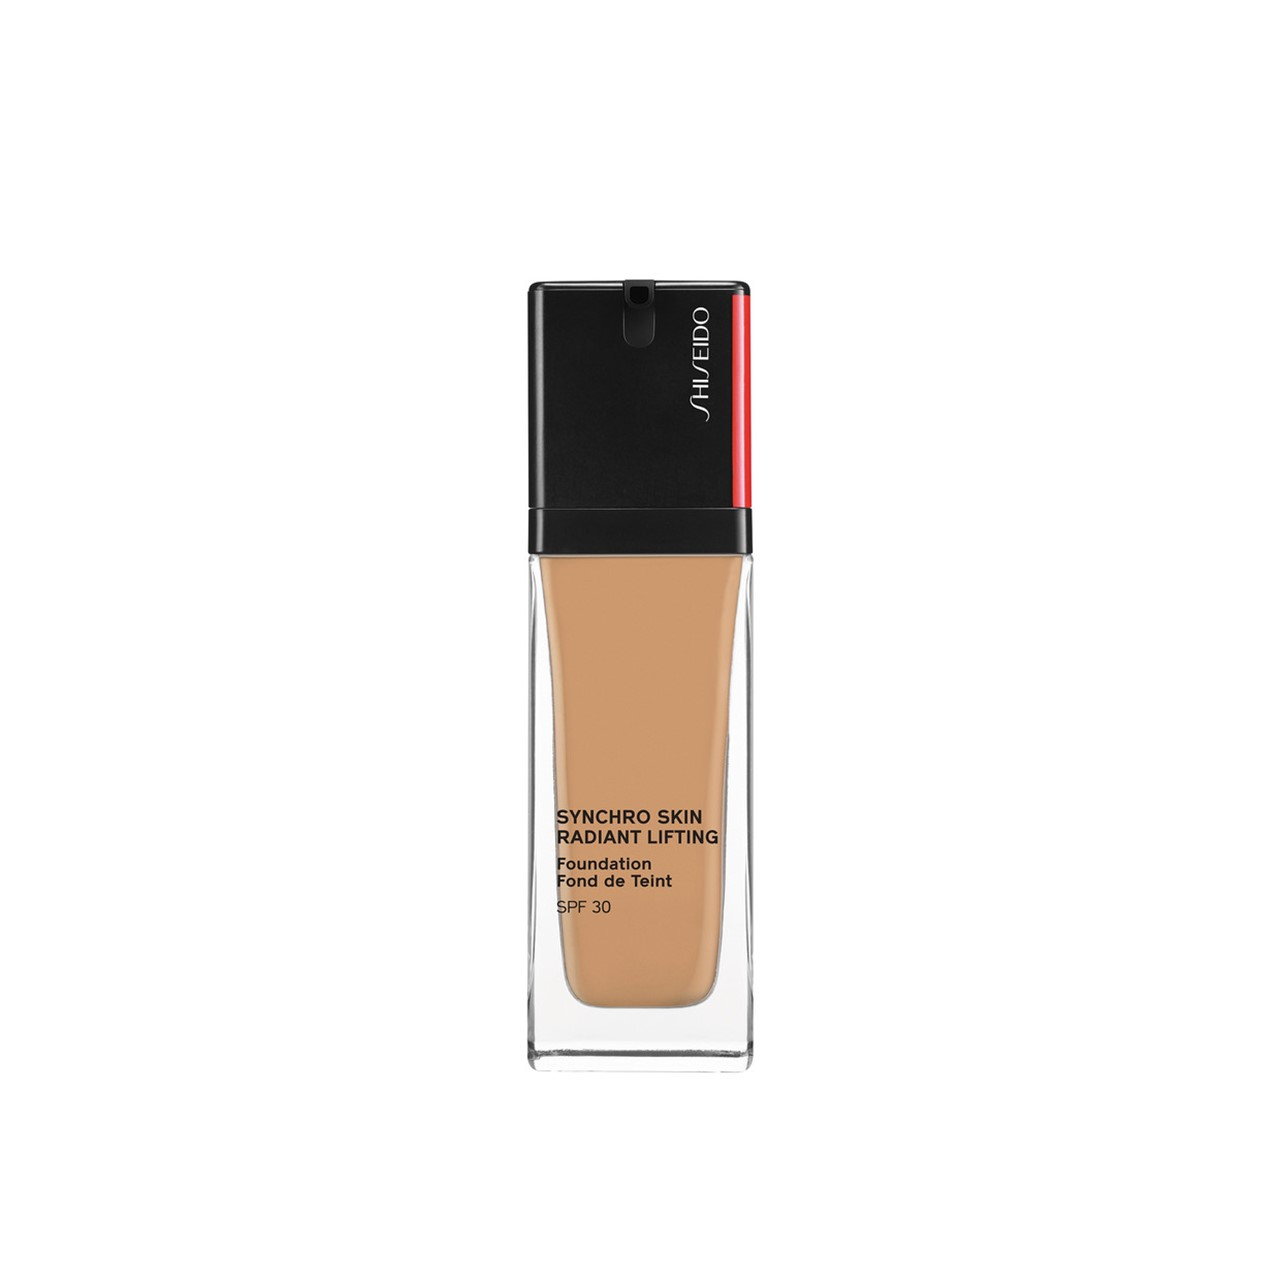 Shiseido Synchro Skin Radiant Lifting Foundation SPF30 350 Maple 30ml (1.01fl oz)